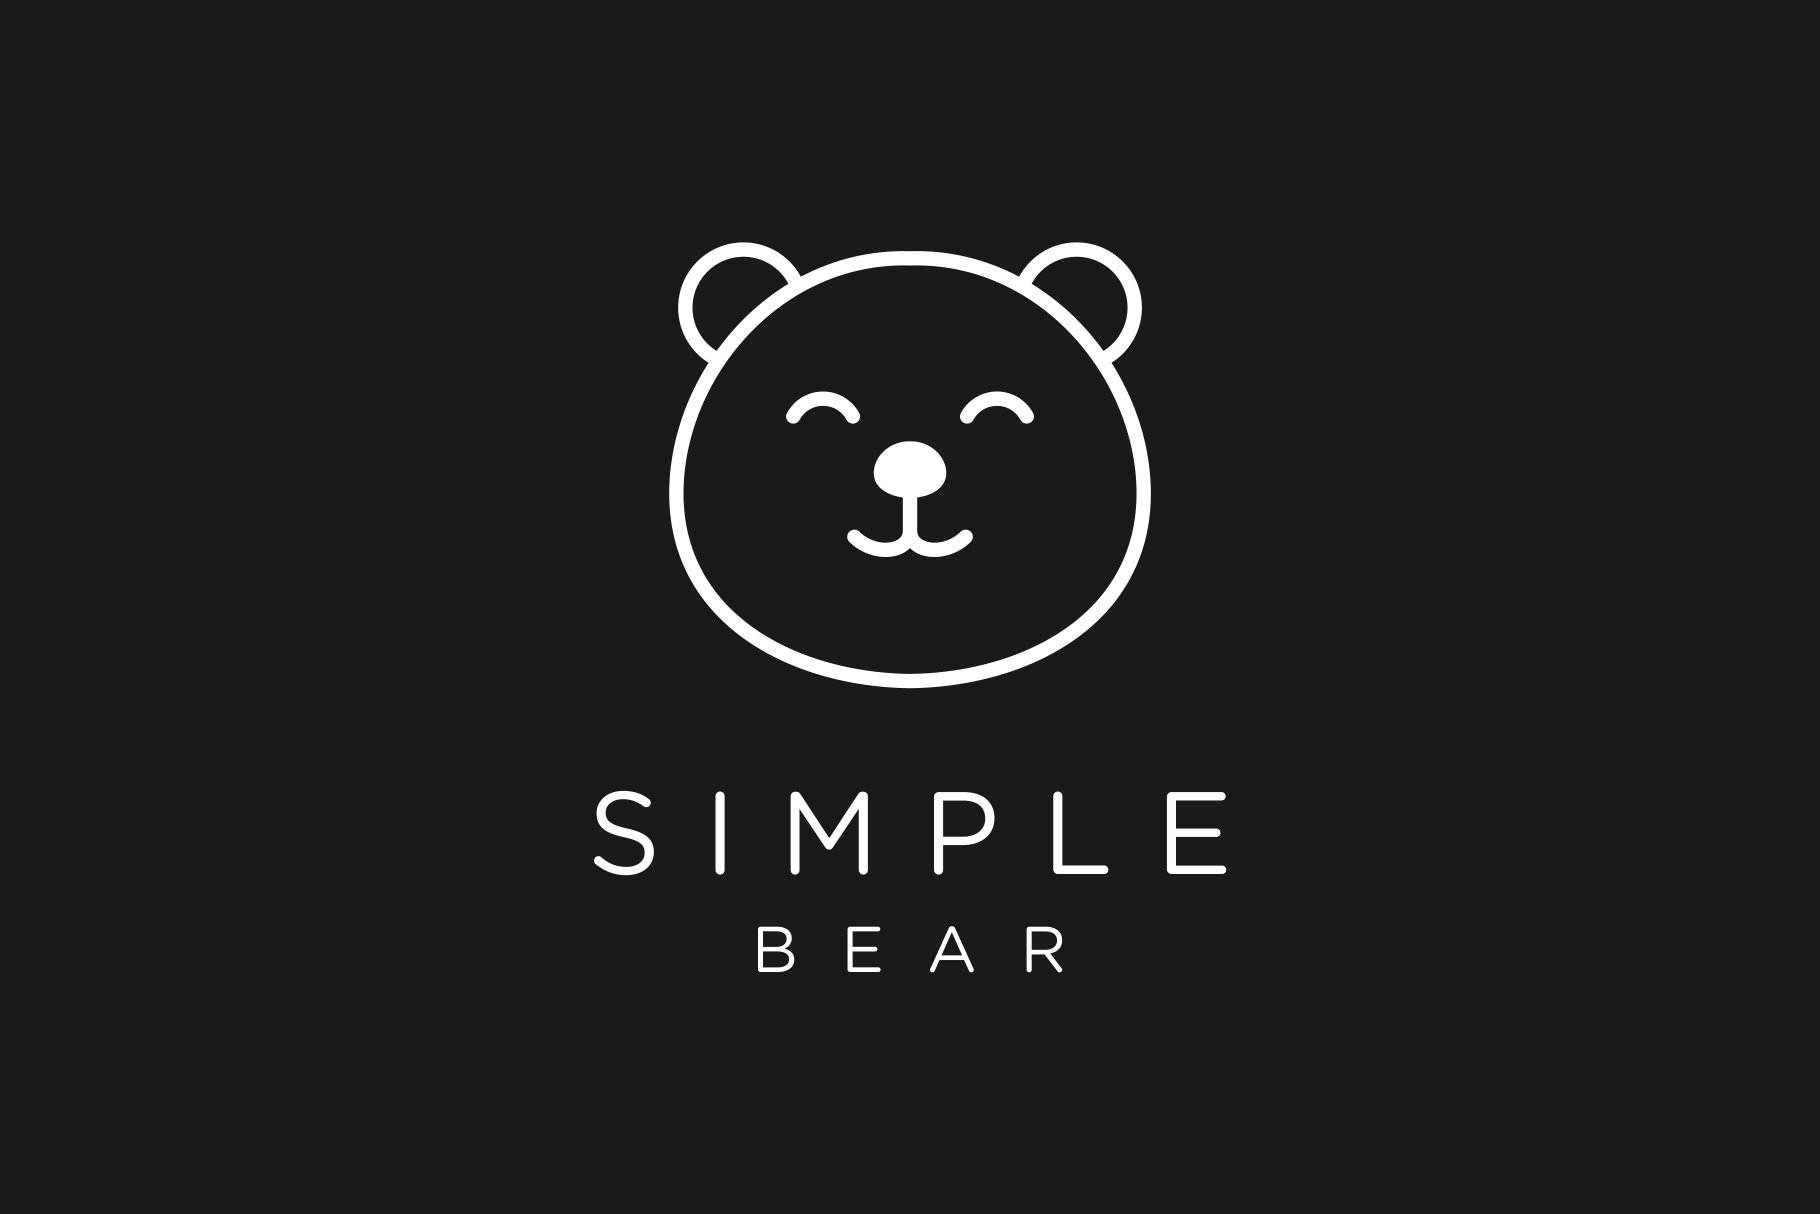 Bear Head Simple Outline Mascot Logo cover image.